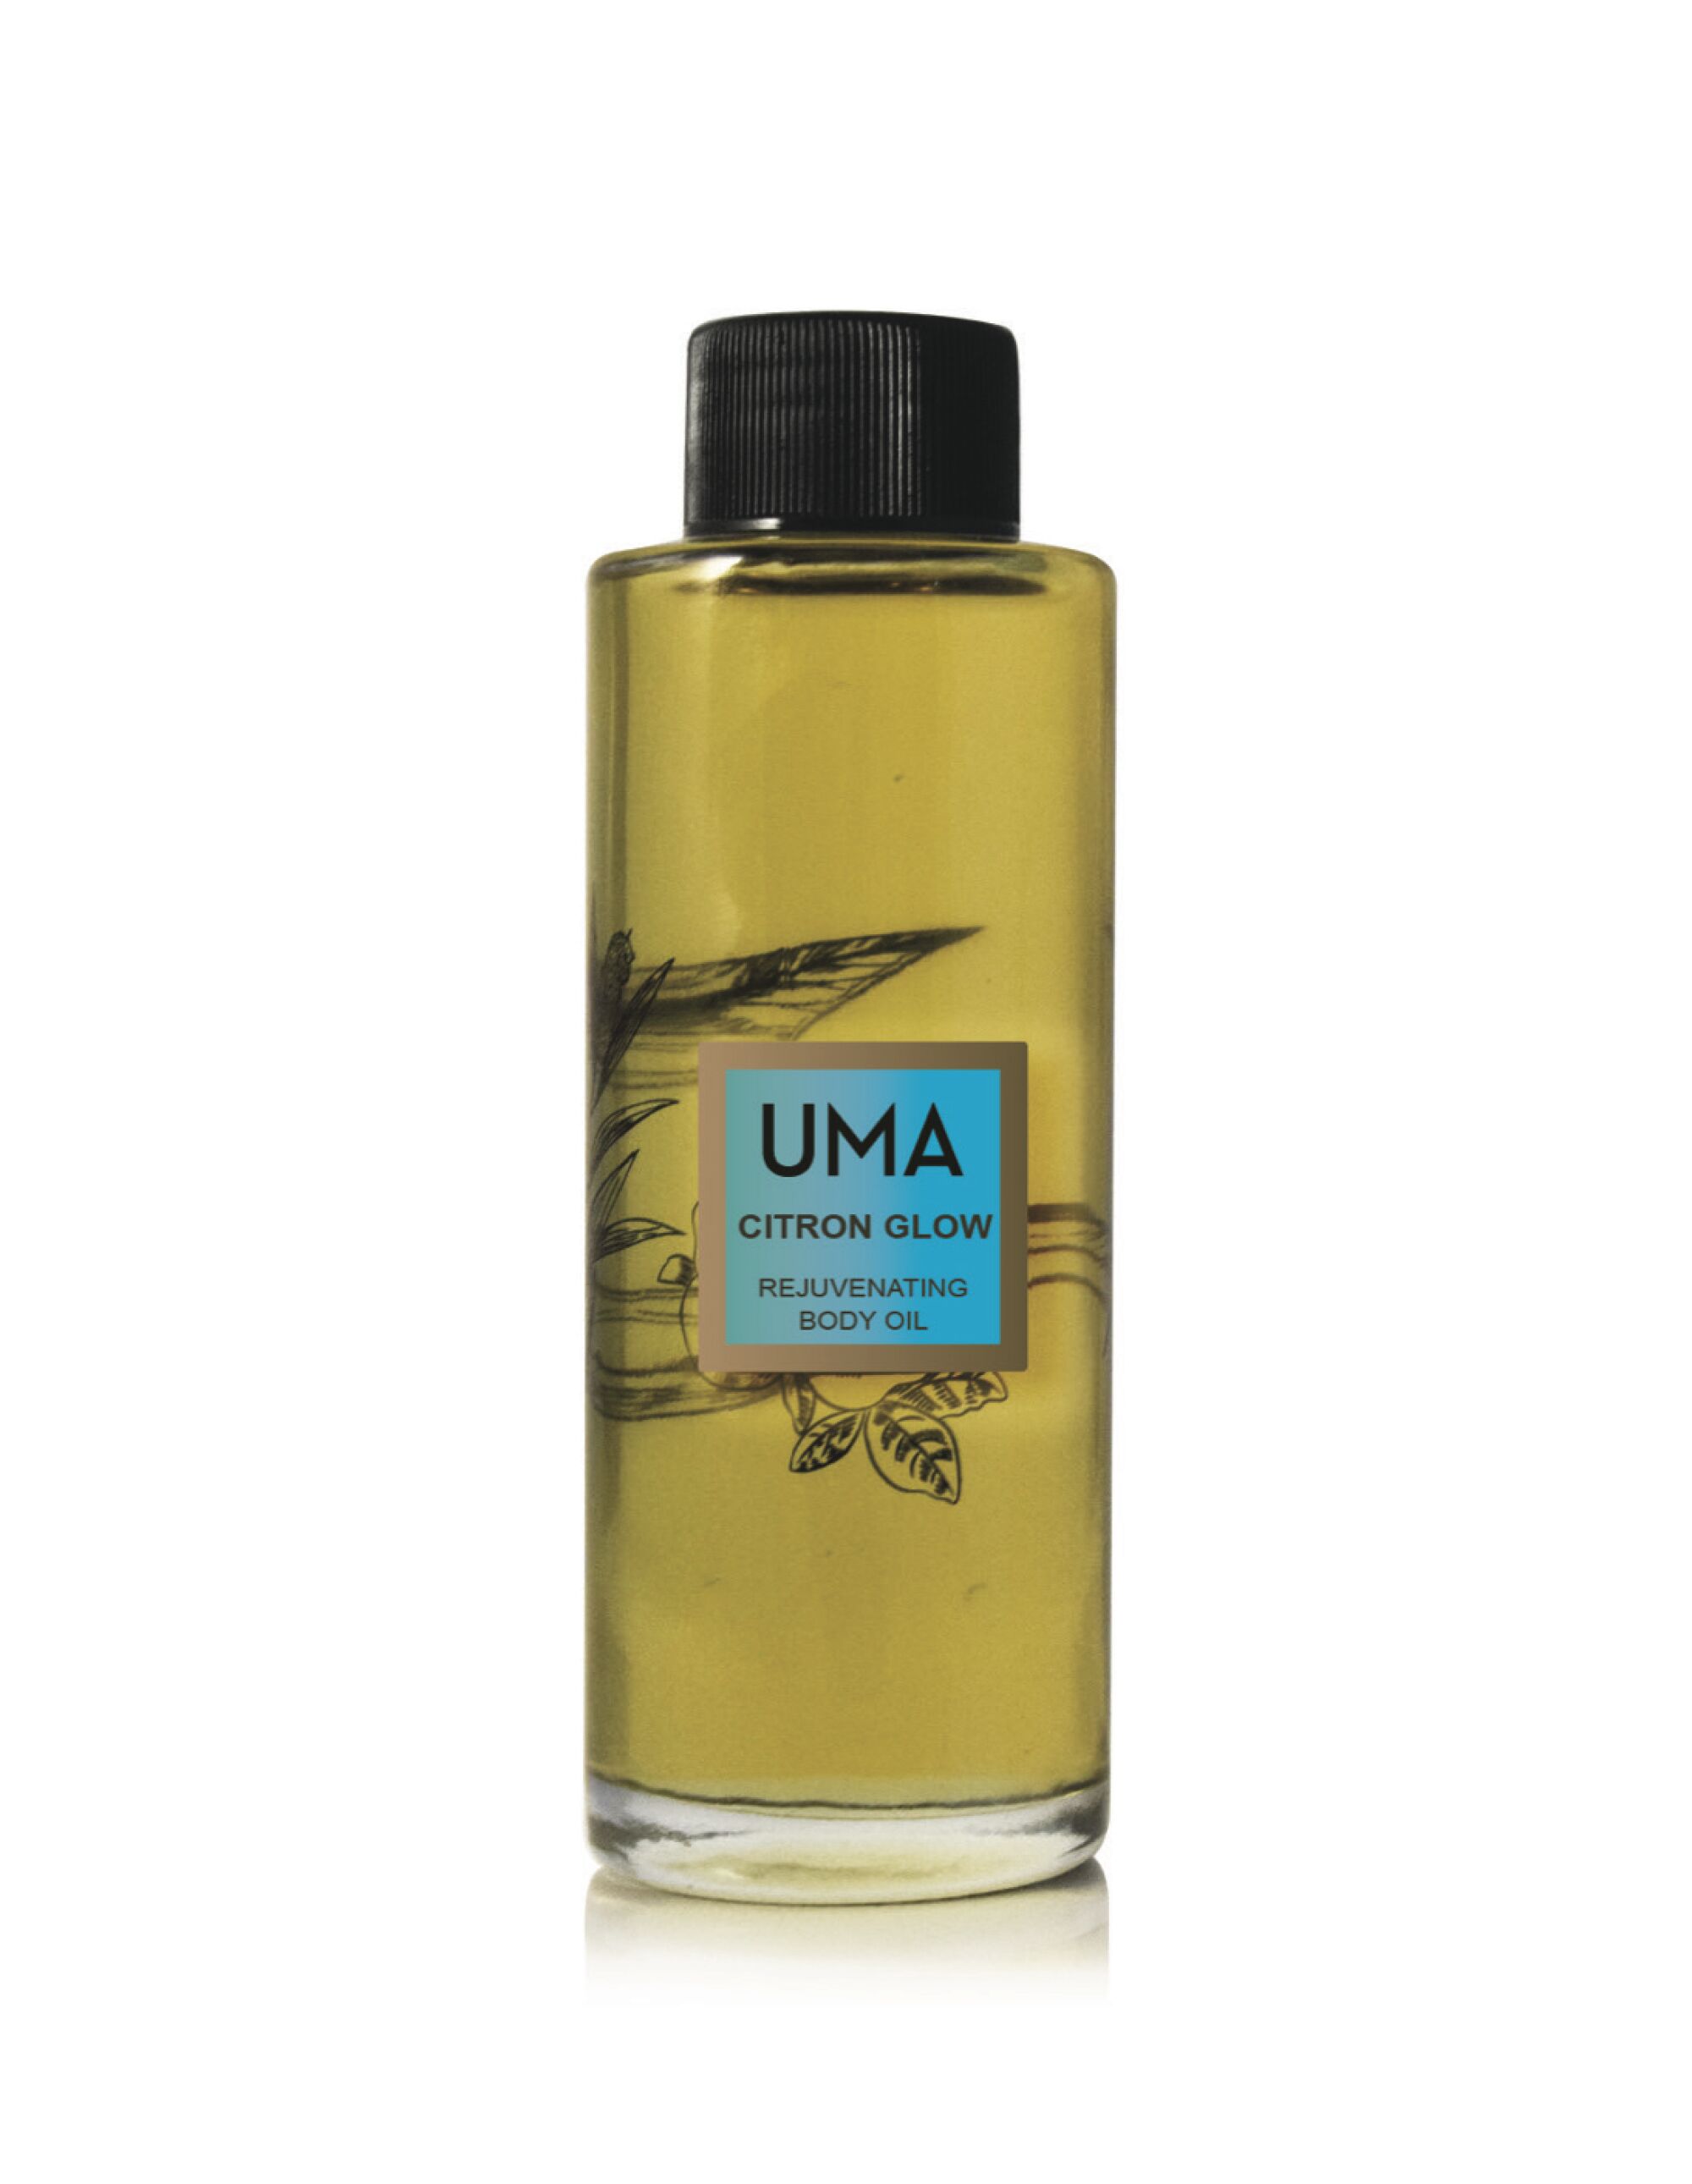 Bottle of UMA citron glow body oil